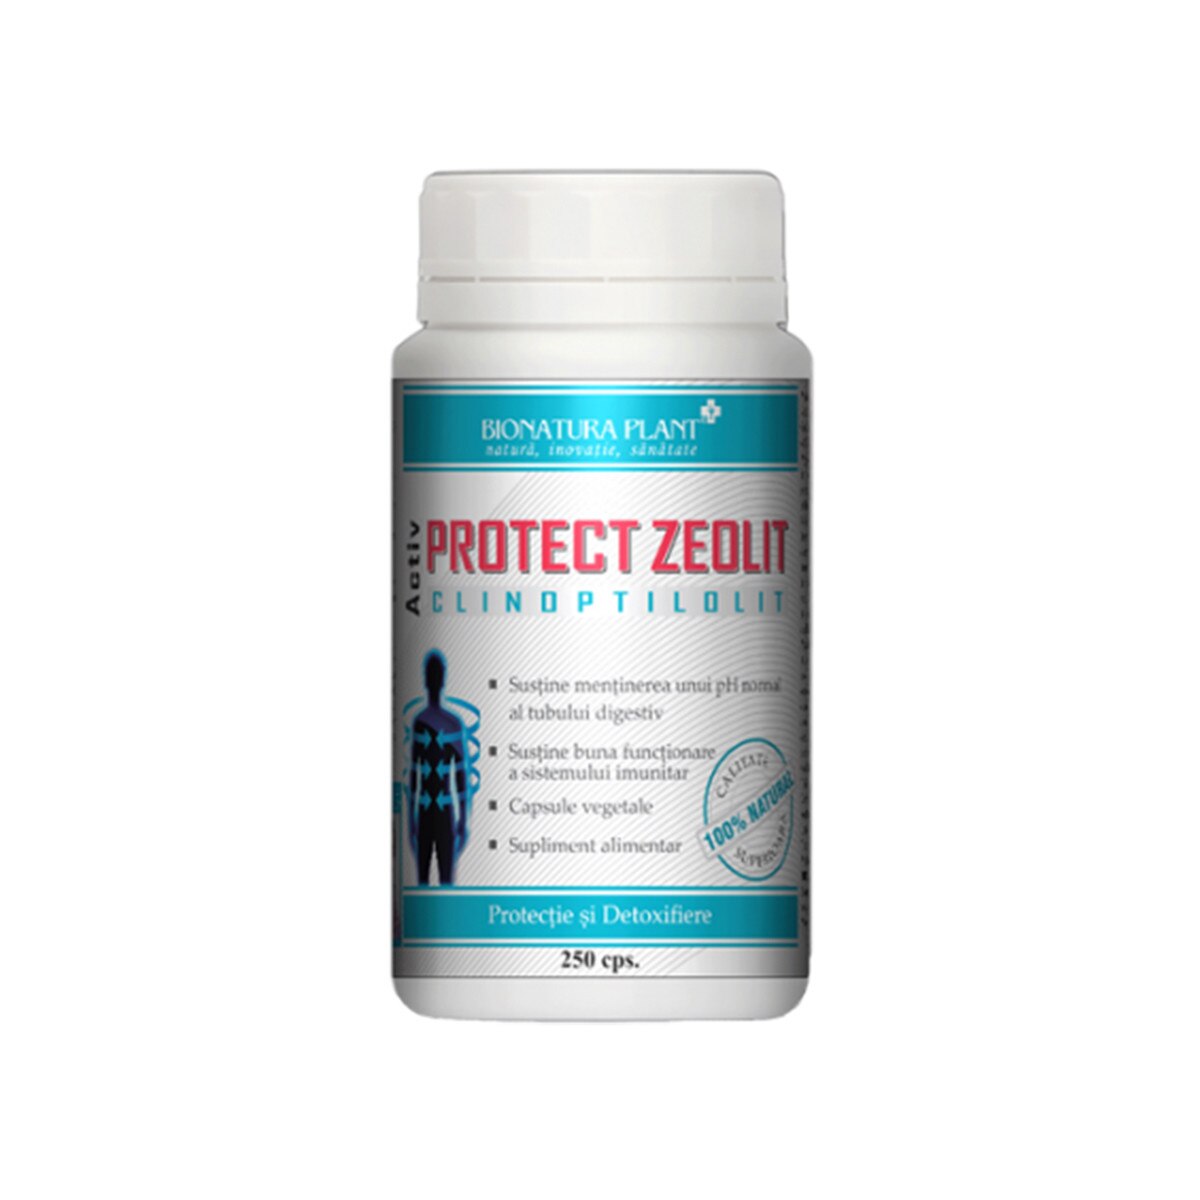 protect zeolit 250 capsule pret)